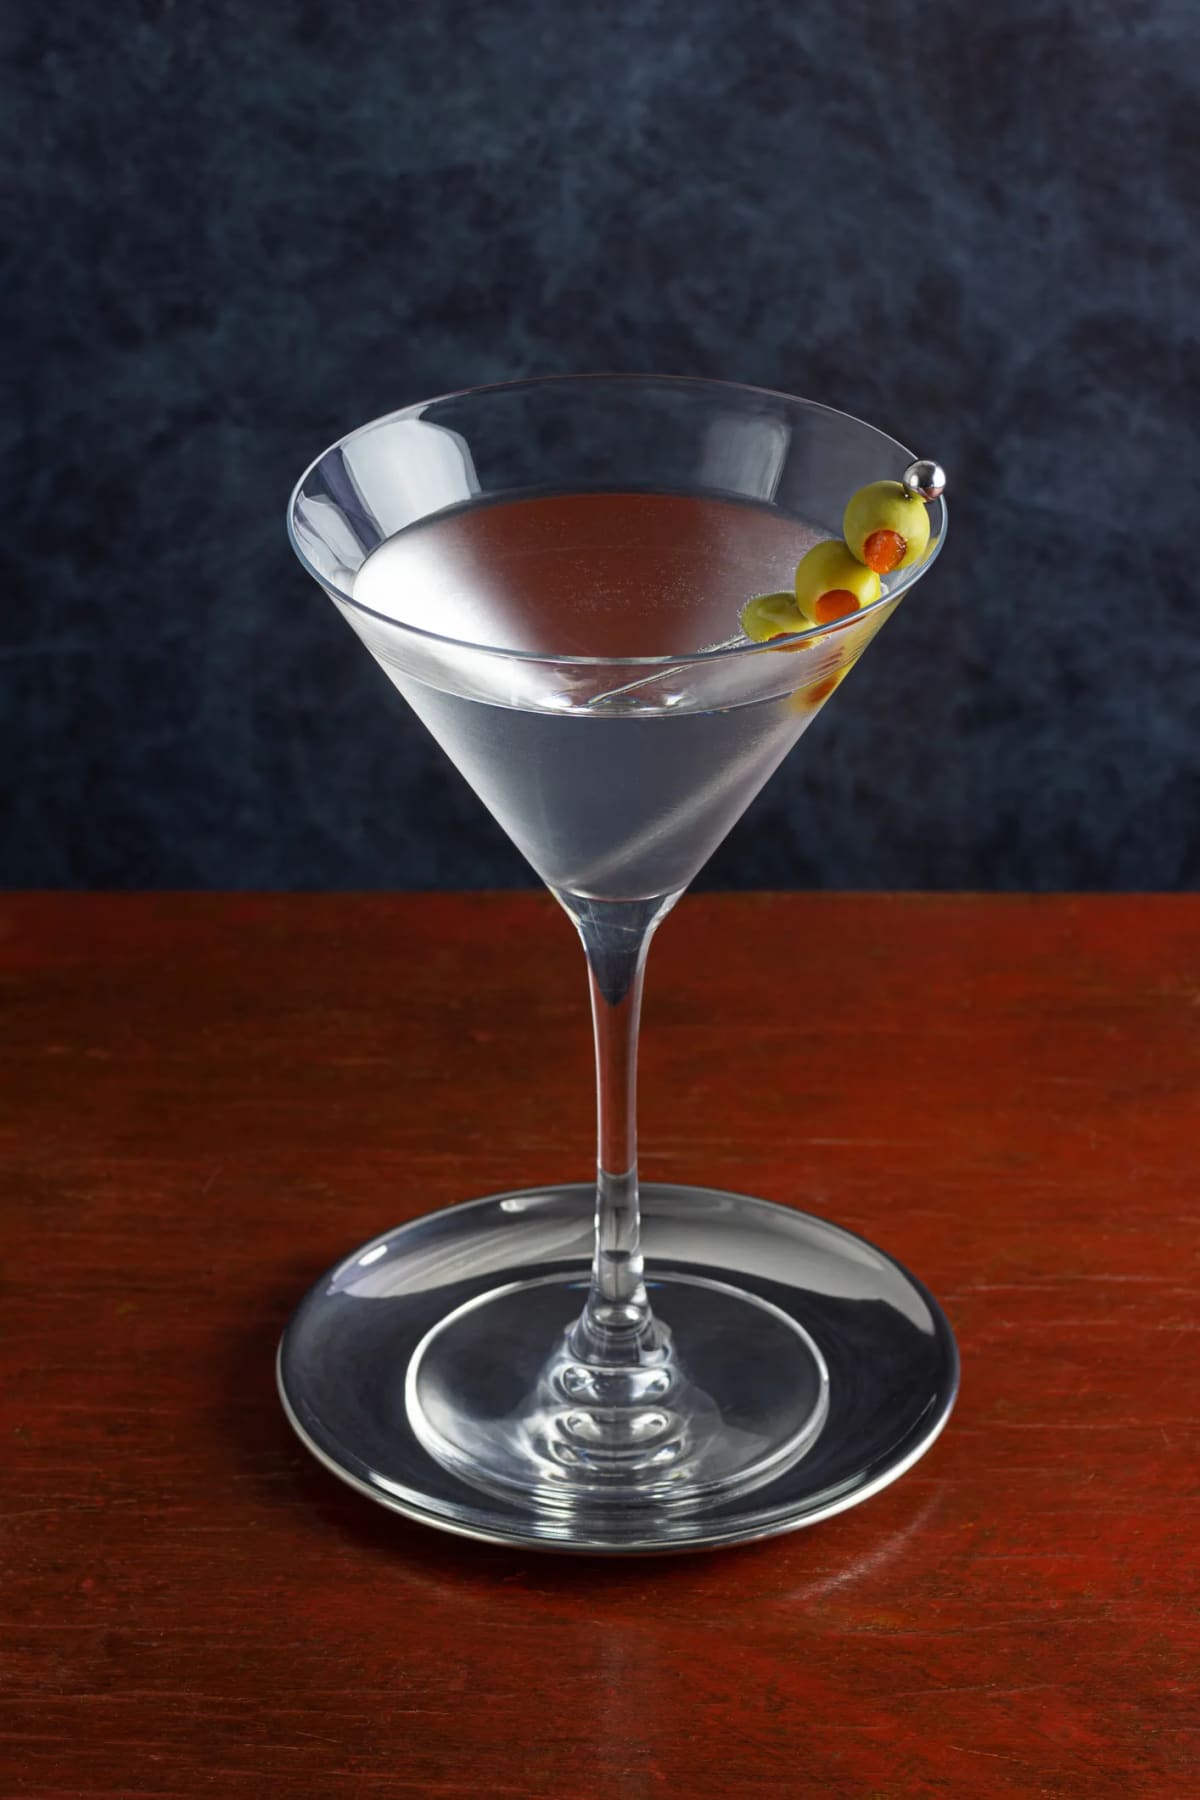 A glass of Martini